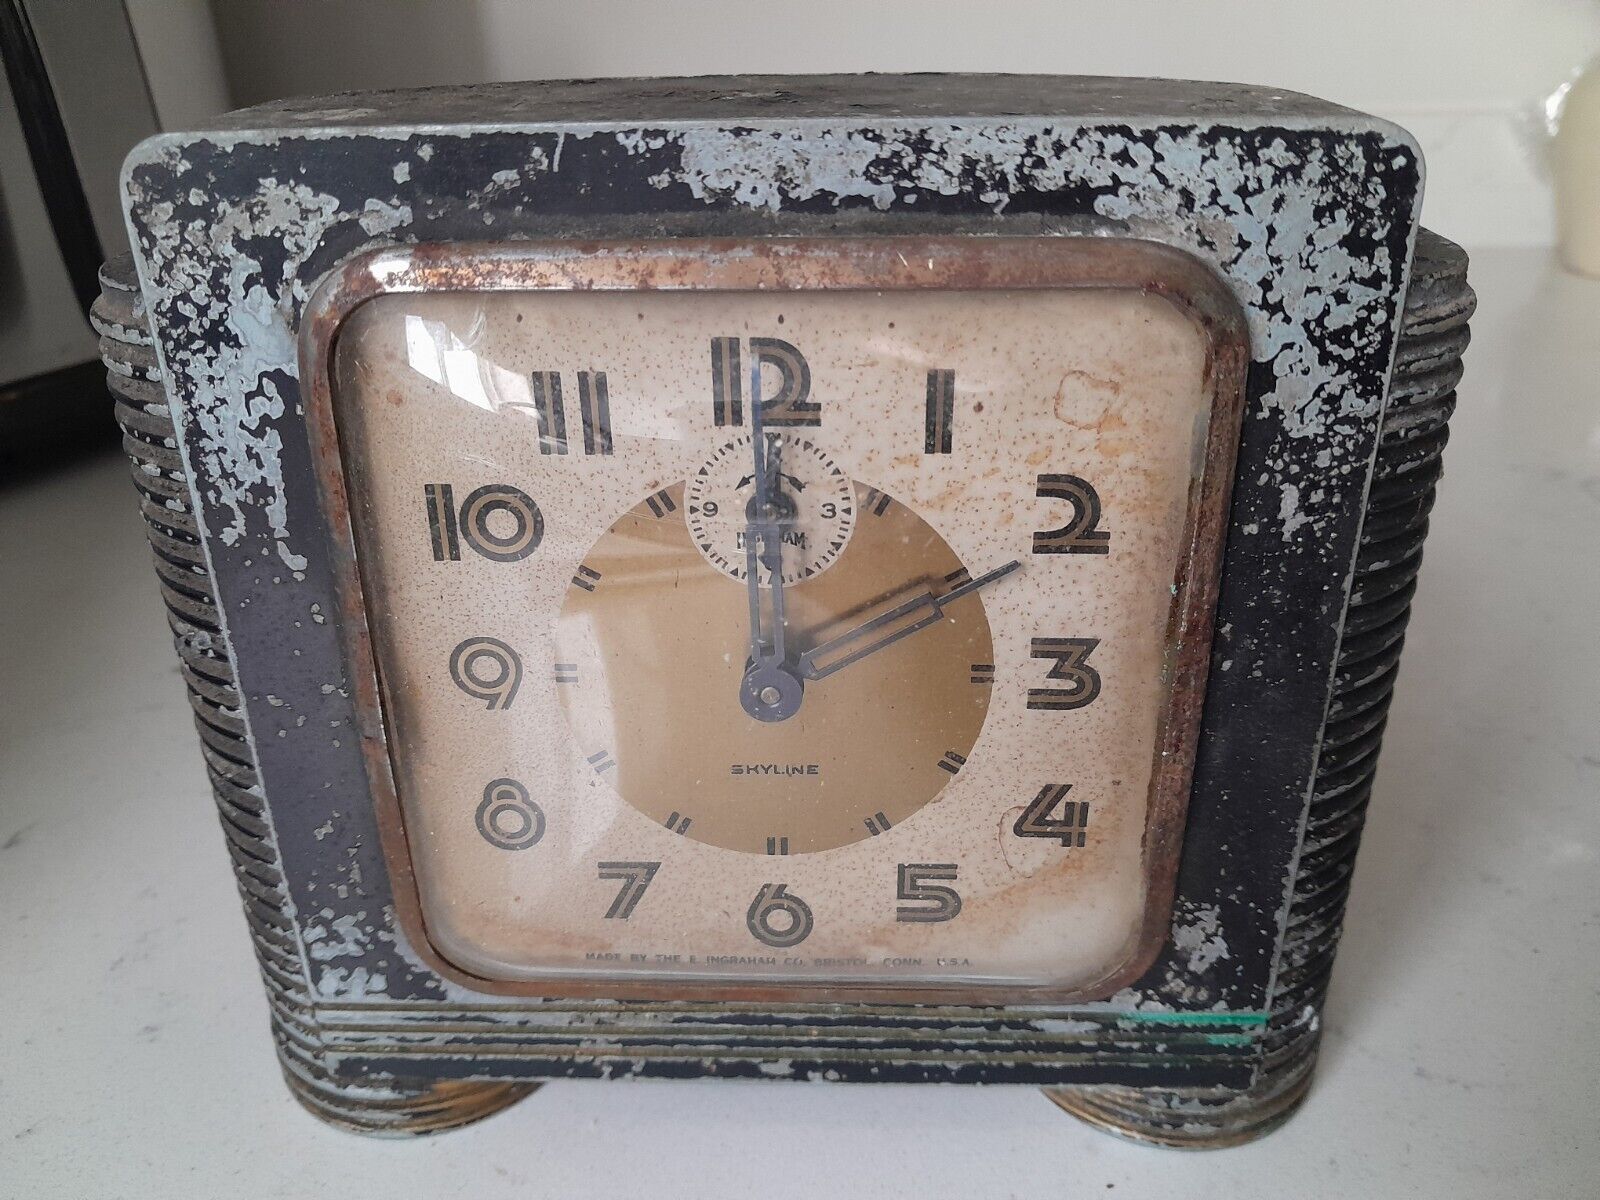 Rare Vintage 1930s Art Deco Metal Skyline Model Ingraham Alarm Clock For Repair